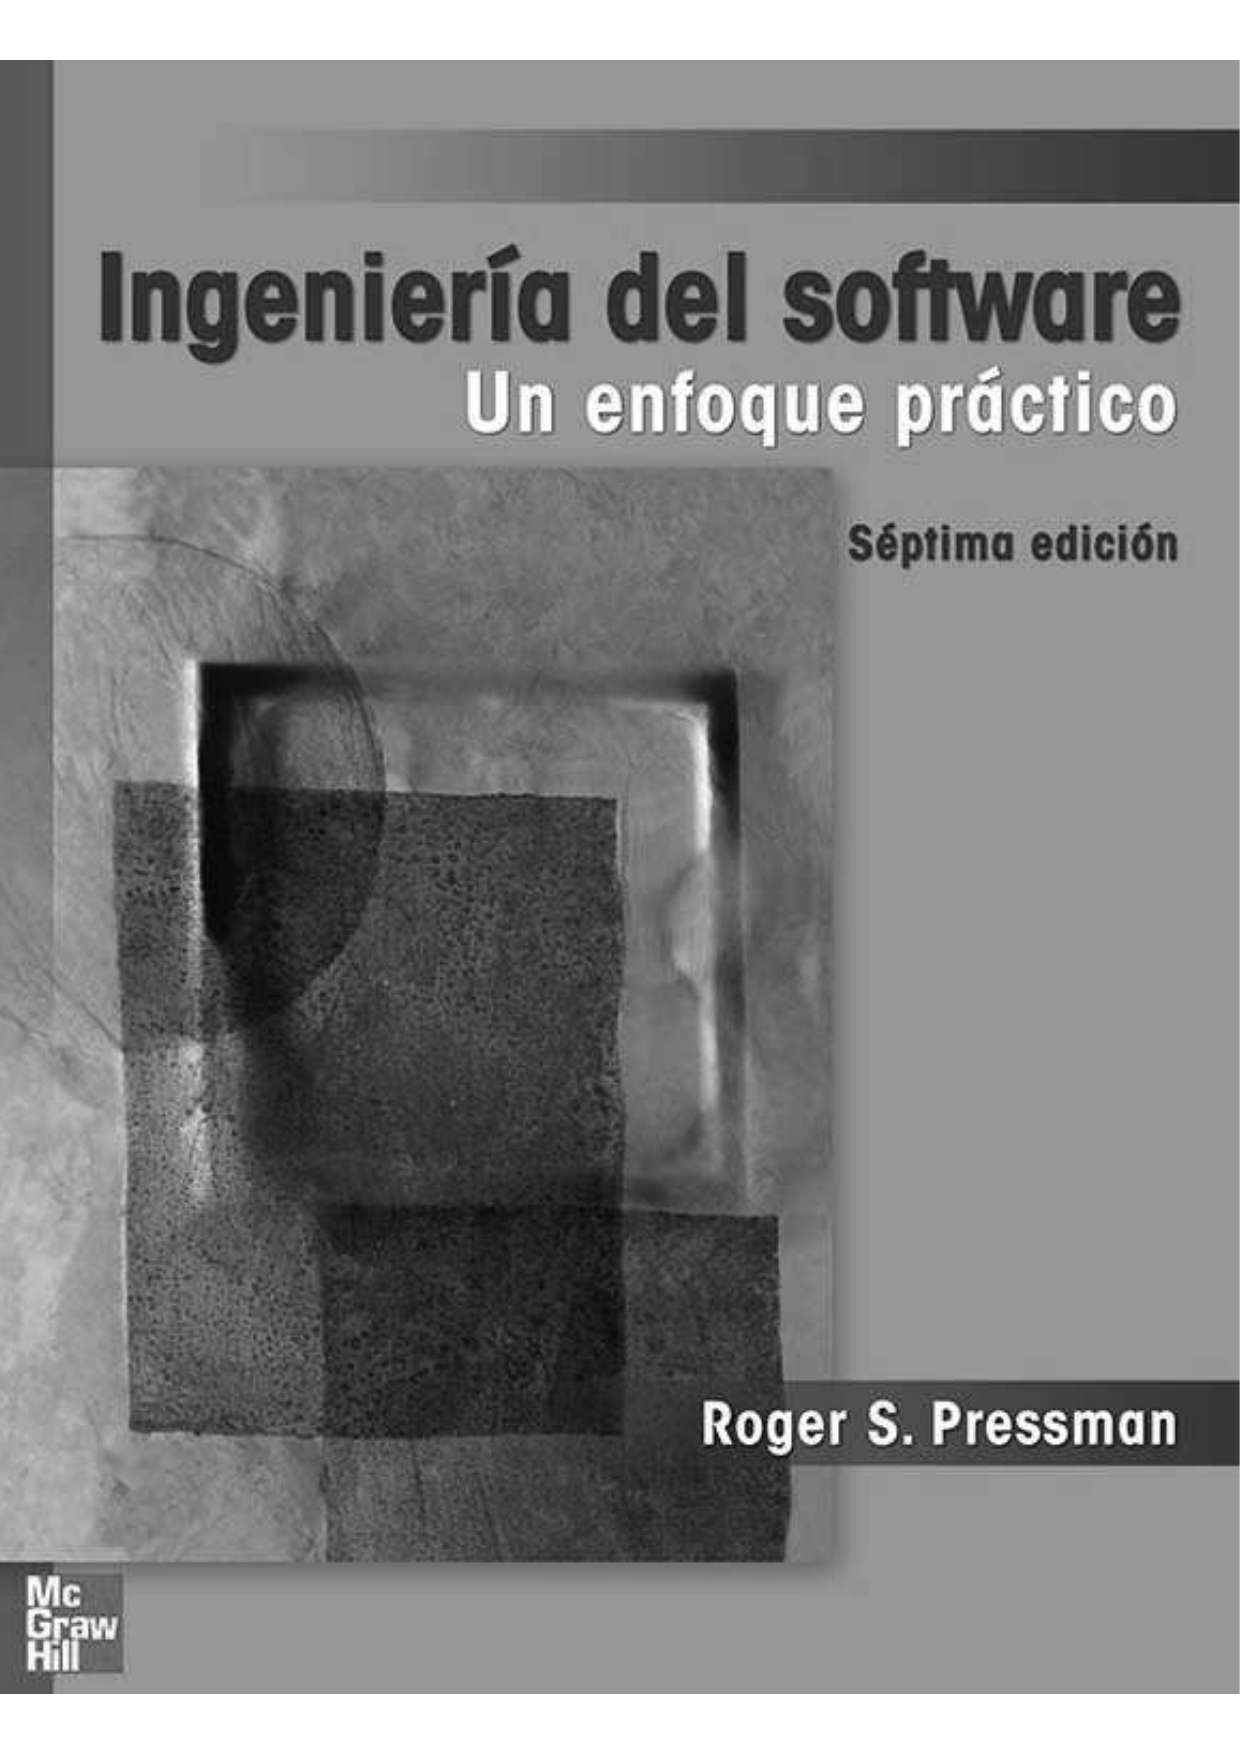 ingenieria de software roger pressman 6 edicion pdf